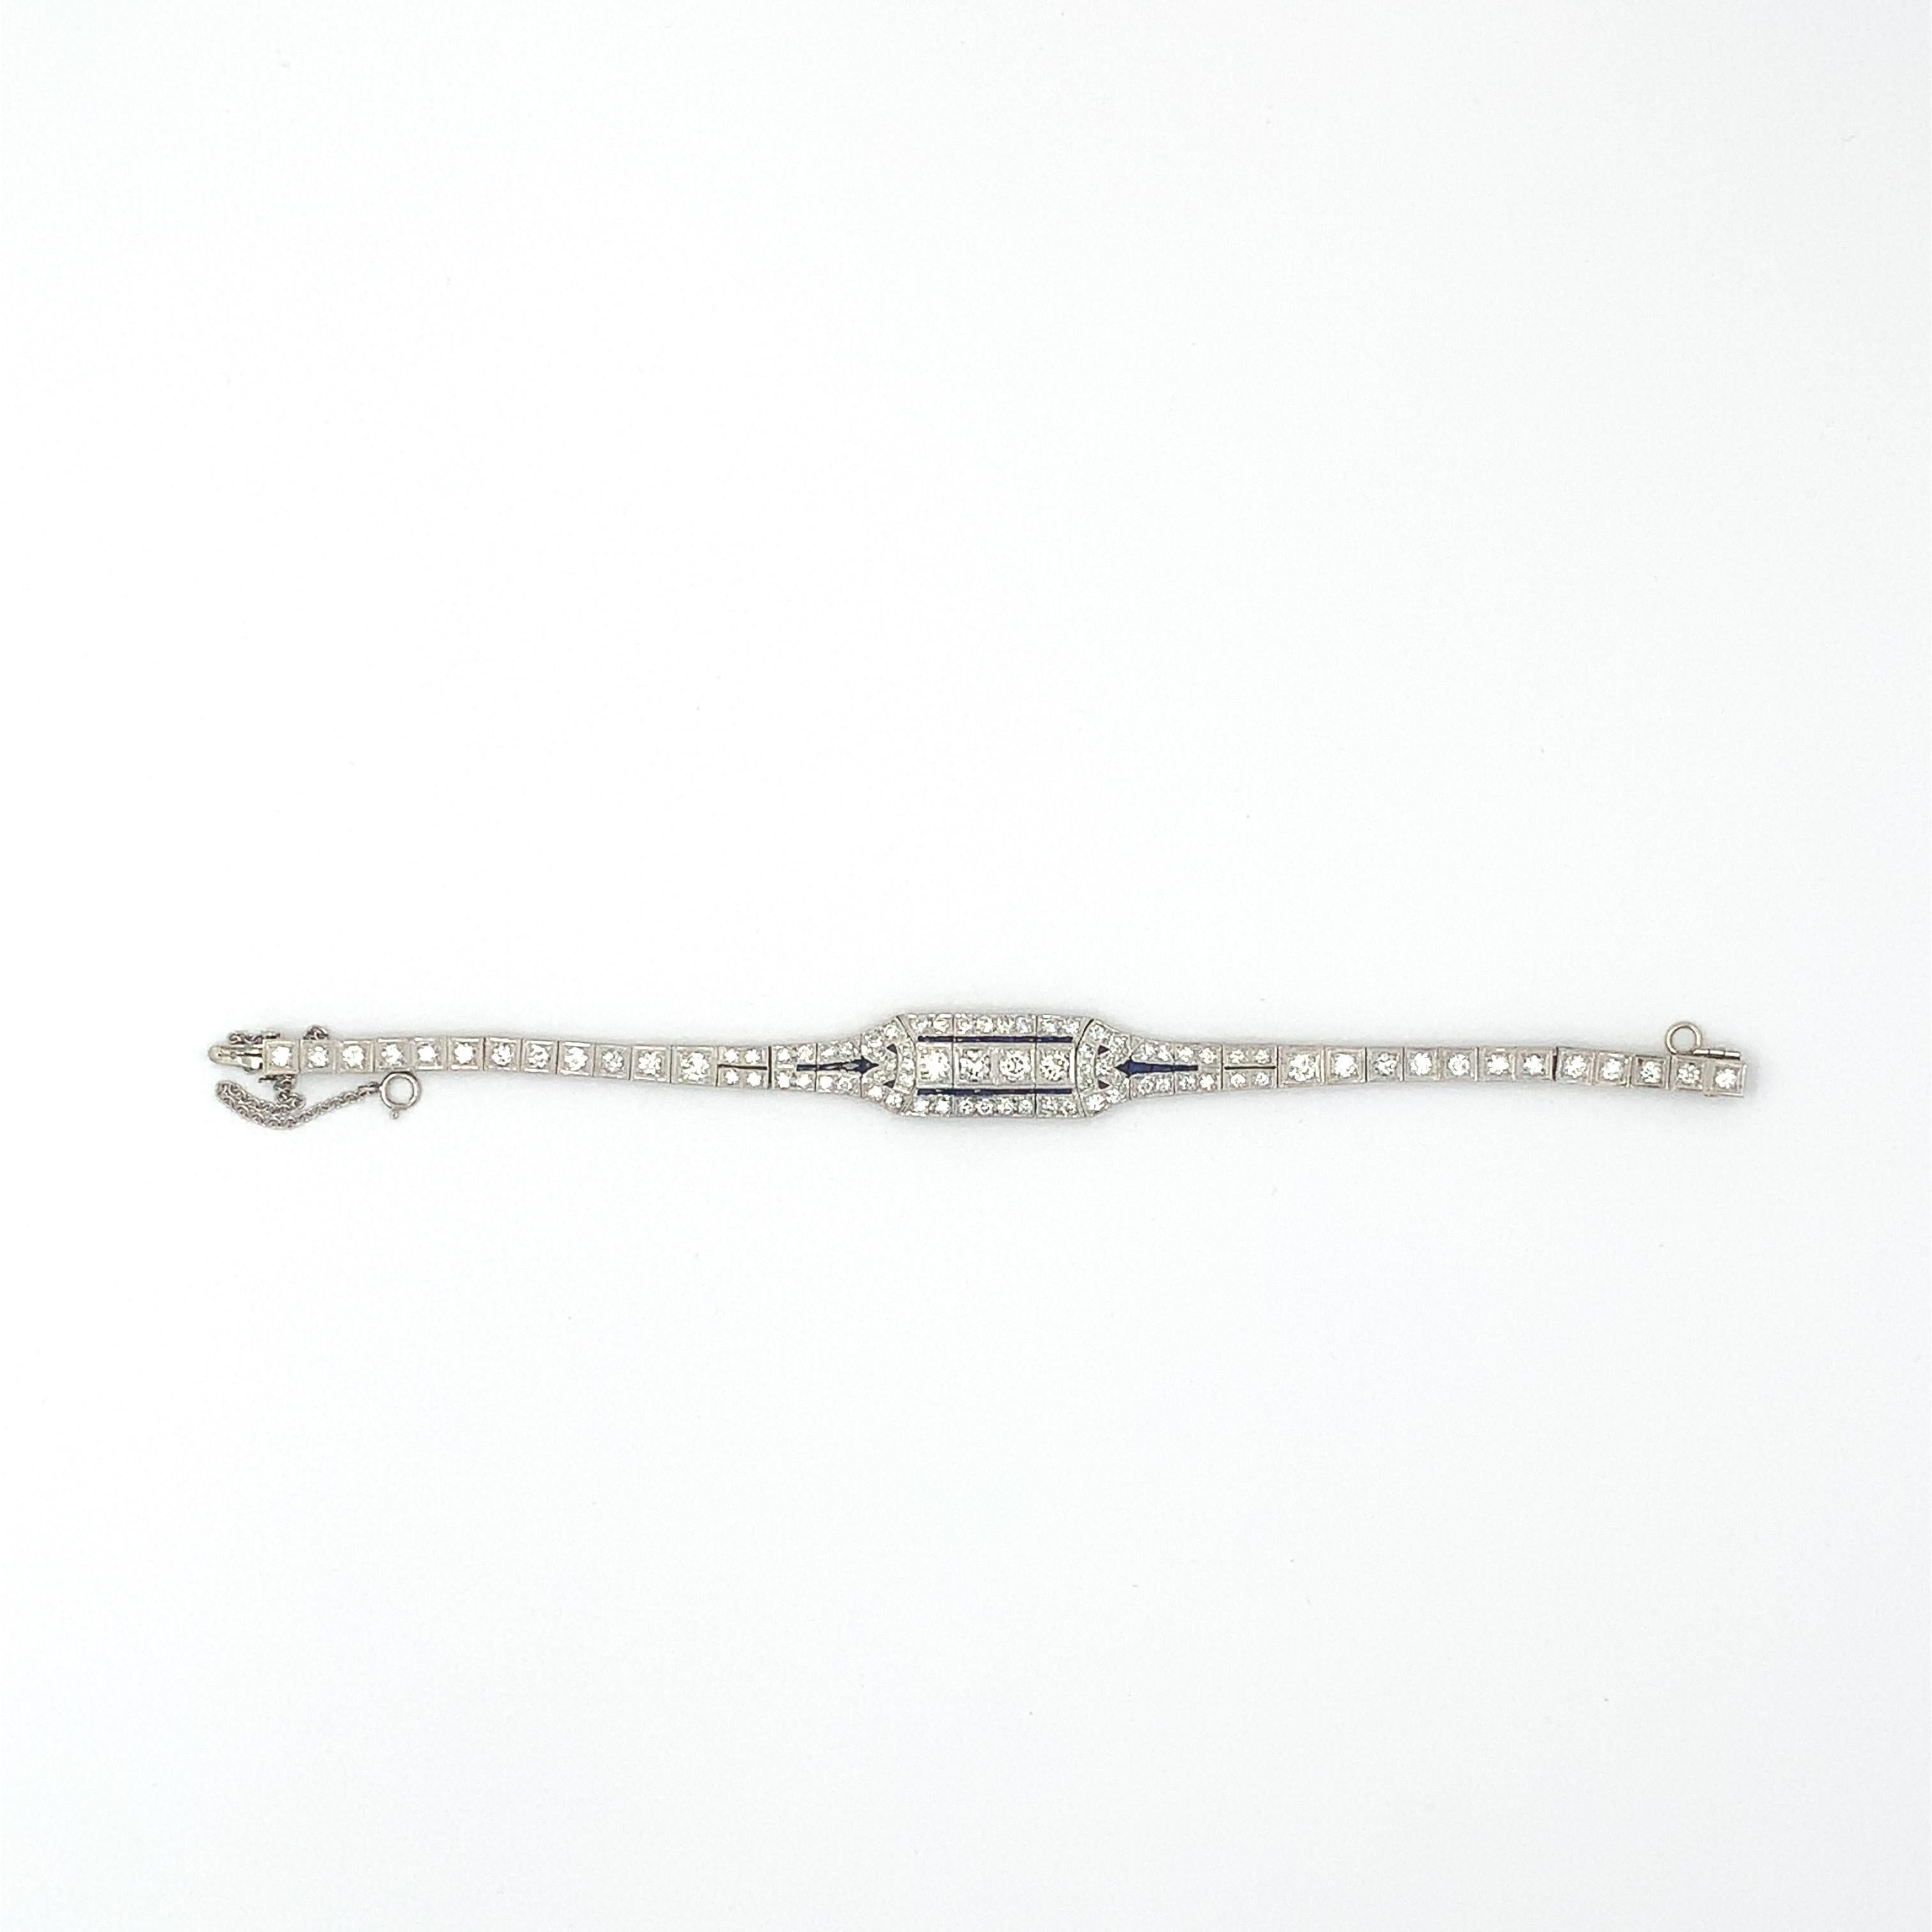 Platinum Art Deco 4.25 carat tw Diamond Bracelet with 18K clasp 7 1/8